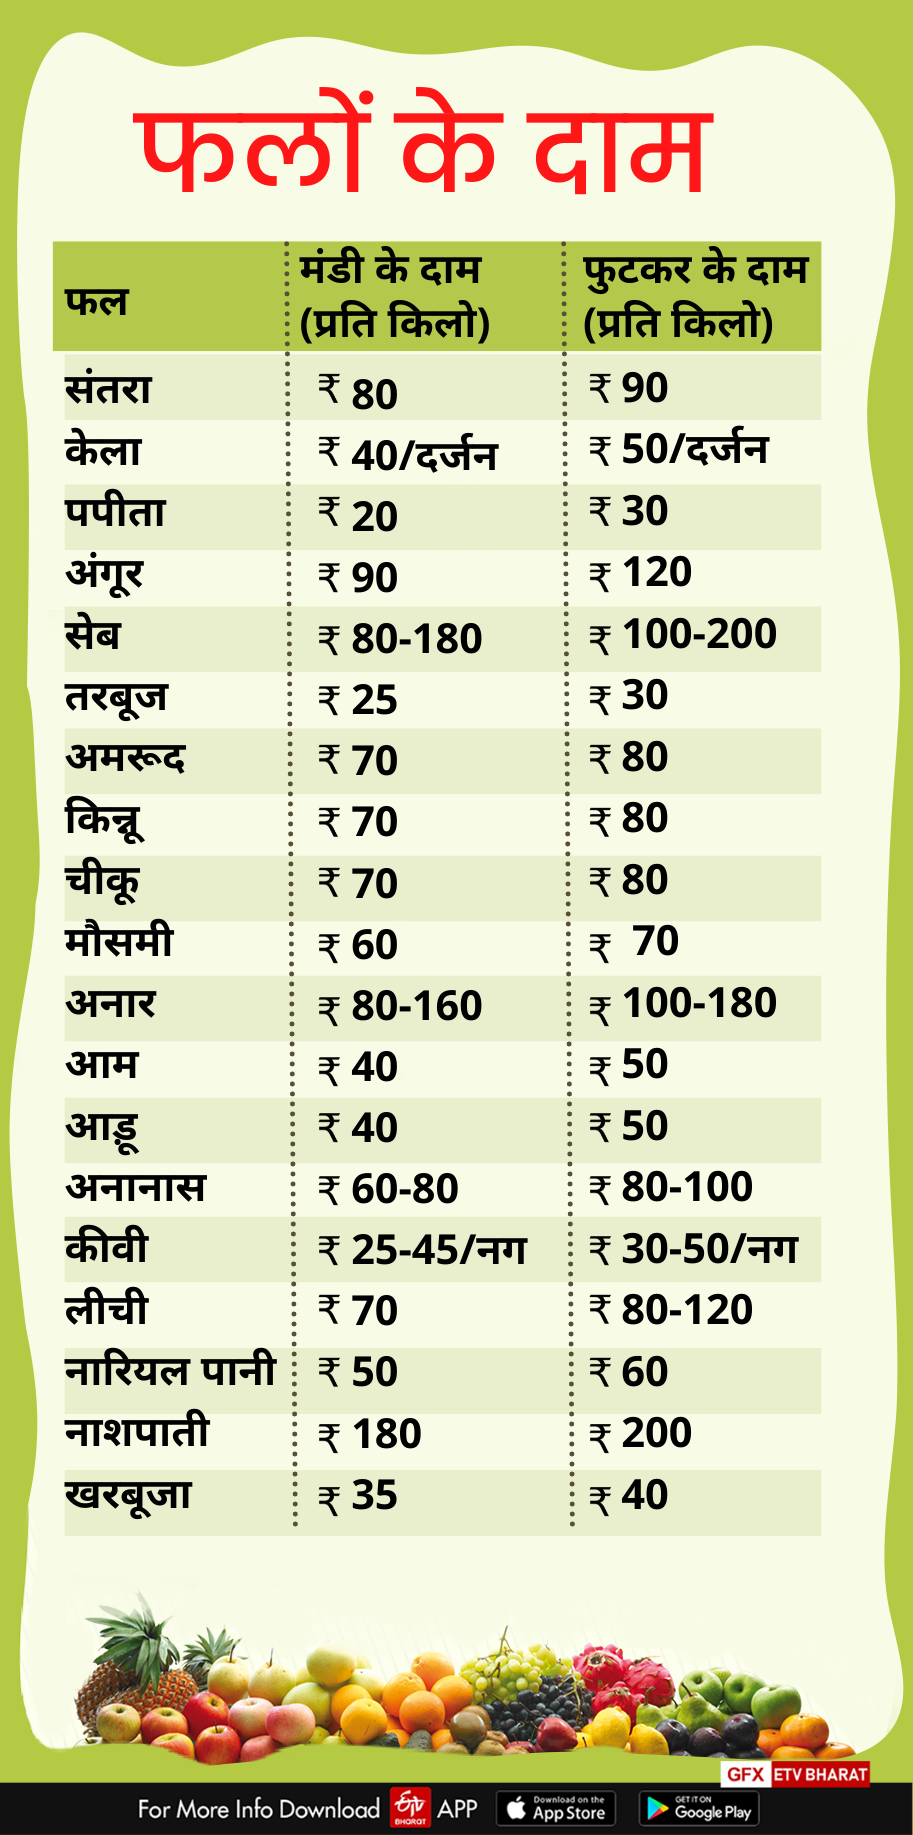 Dehradun ration price